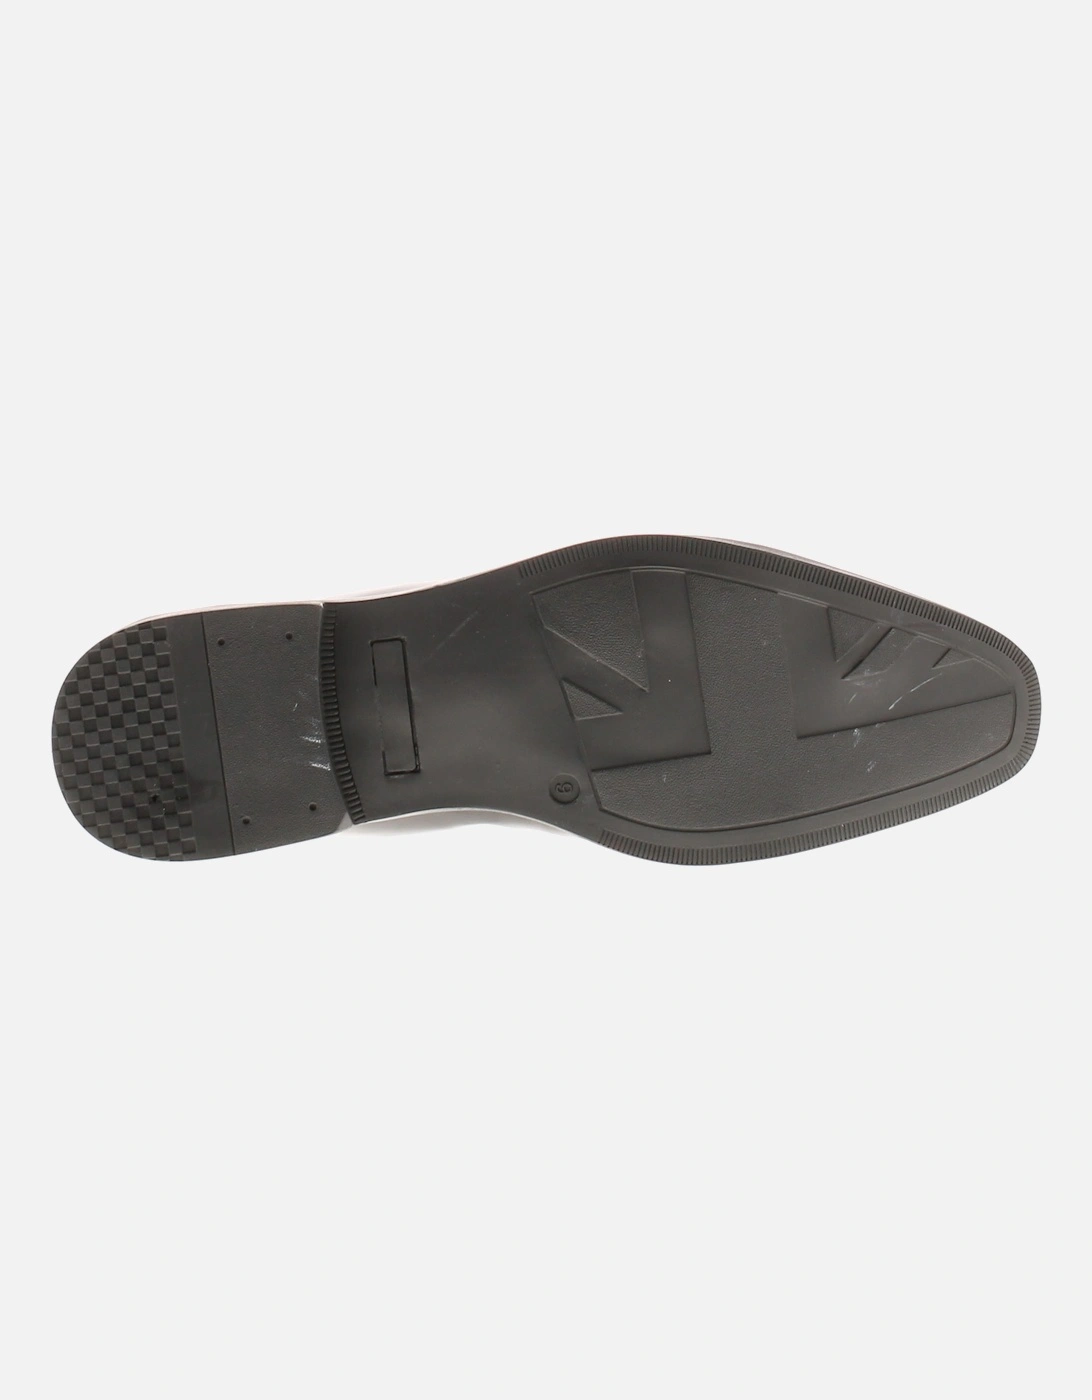 Mens Smart Shoes Logan Leather black UK Size